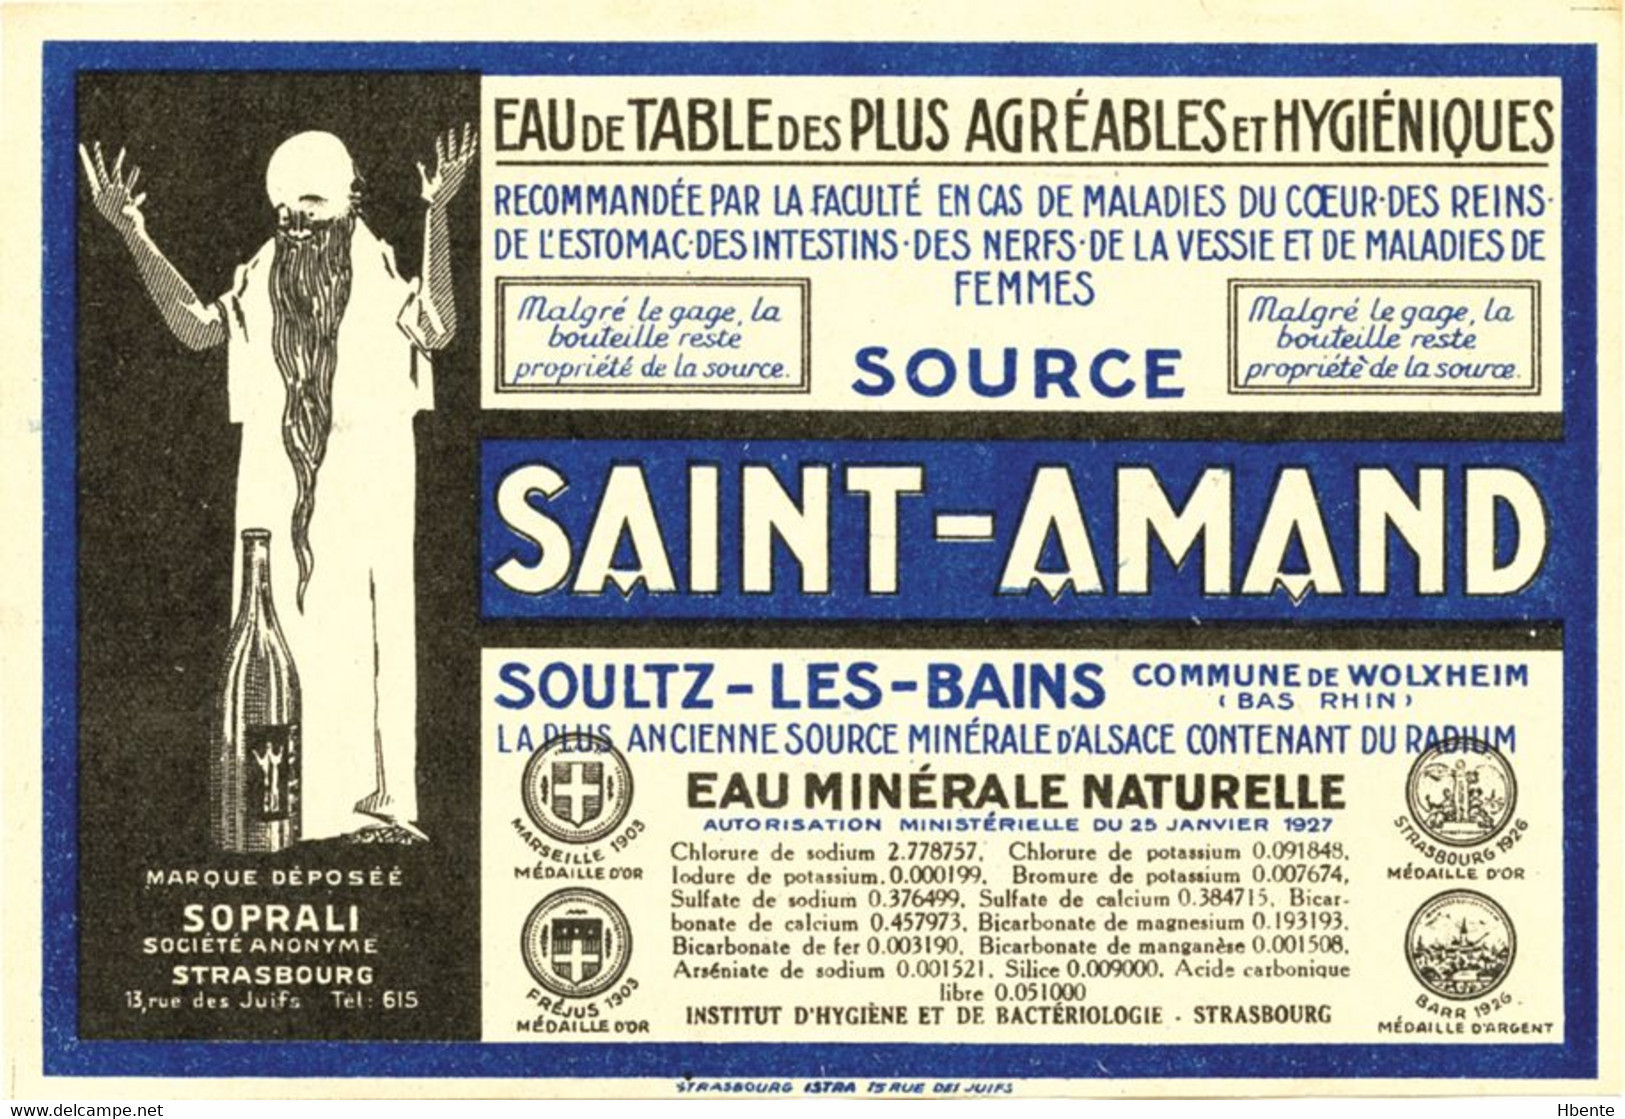 Eau Minérale Source Saint-Amand Soultz-Les-Bains Wolxheim Bas Rhin Radium (Photo) - Gegenstände